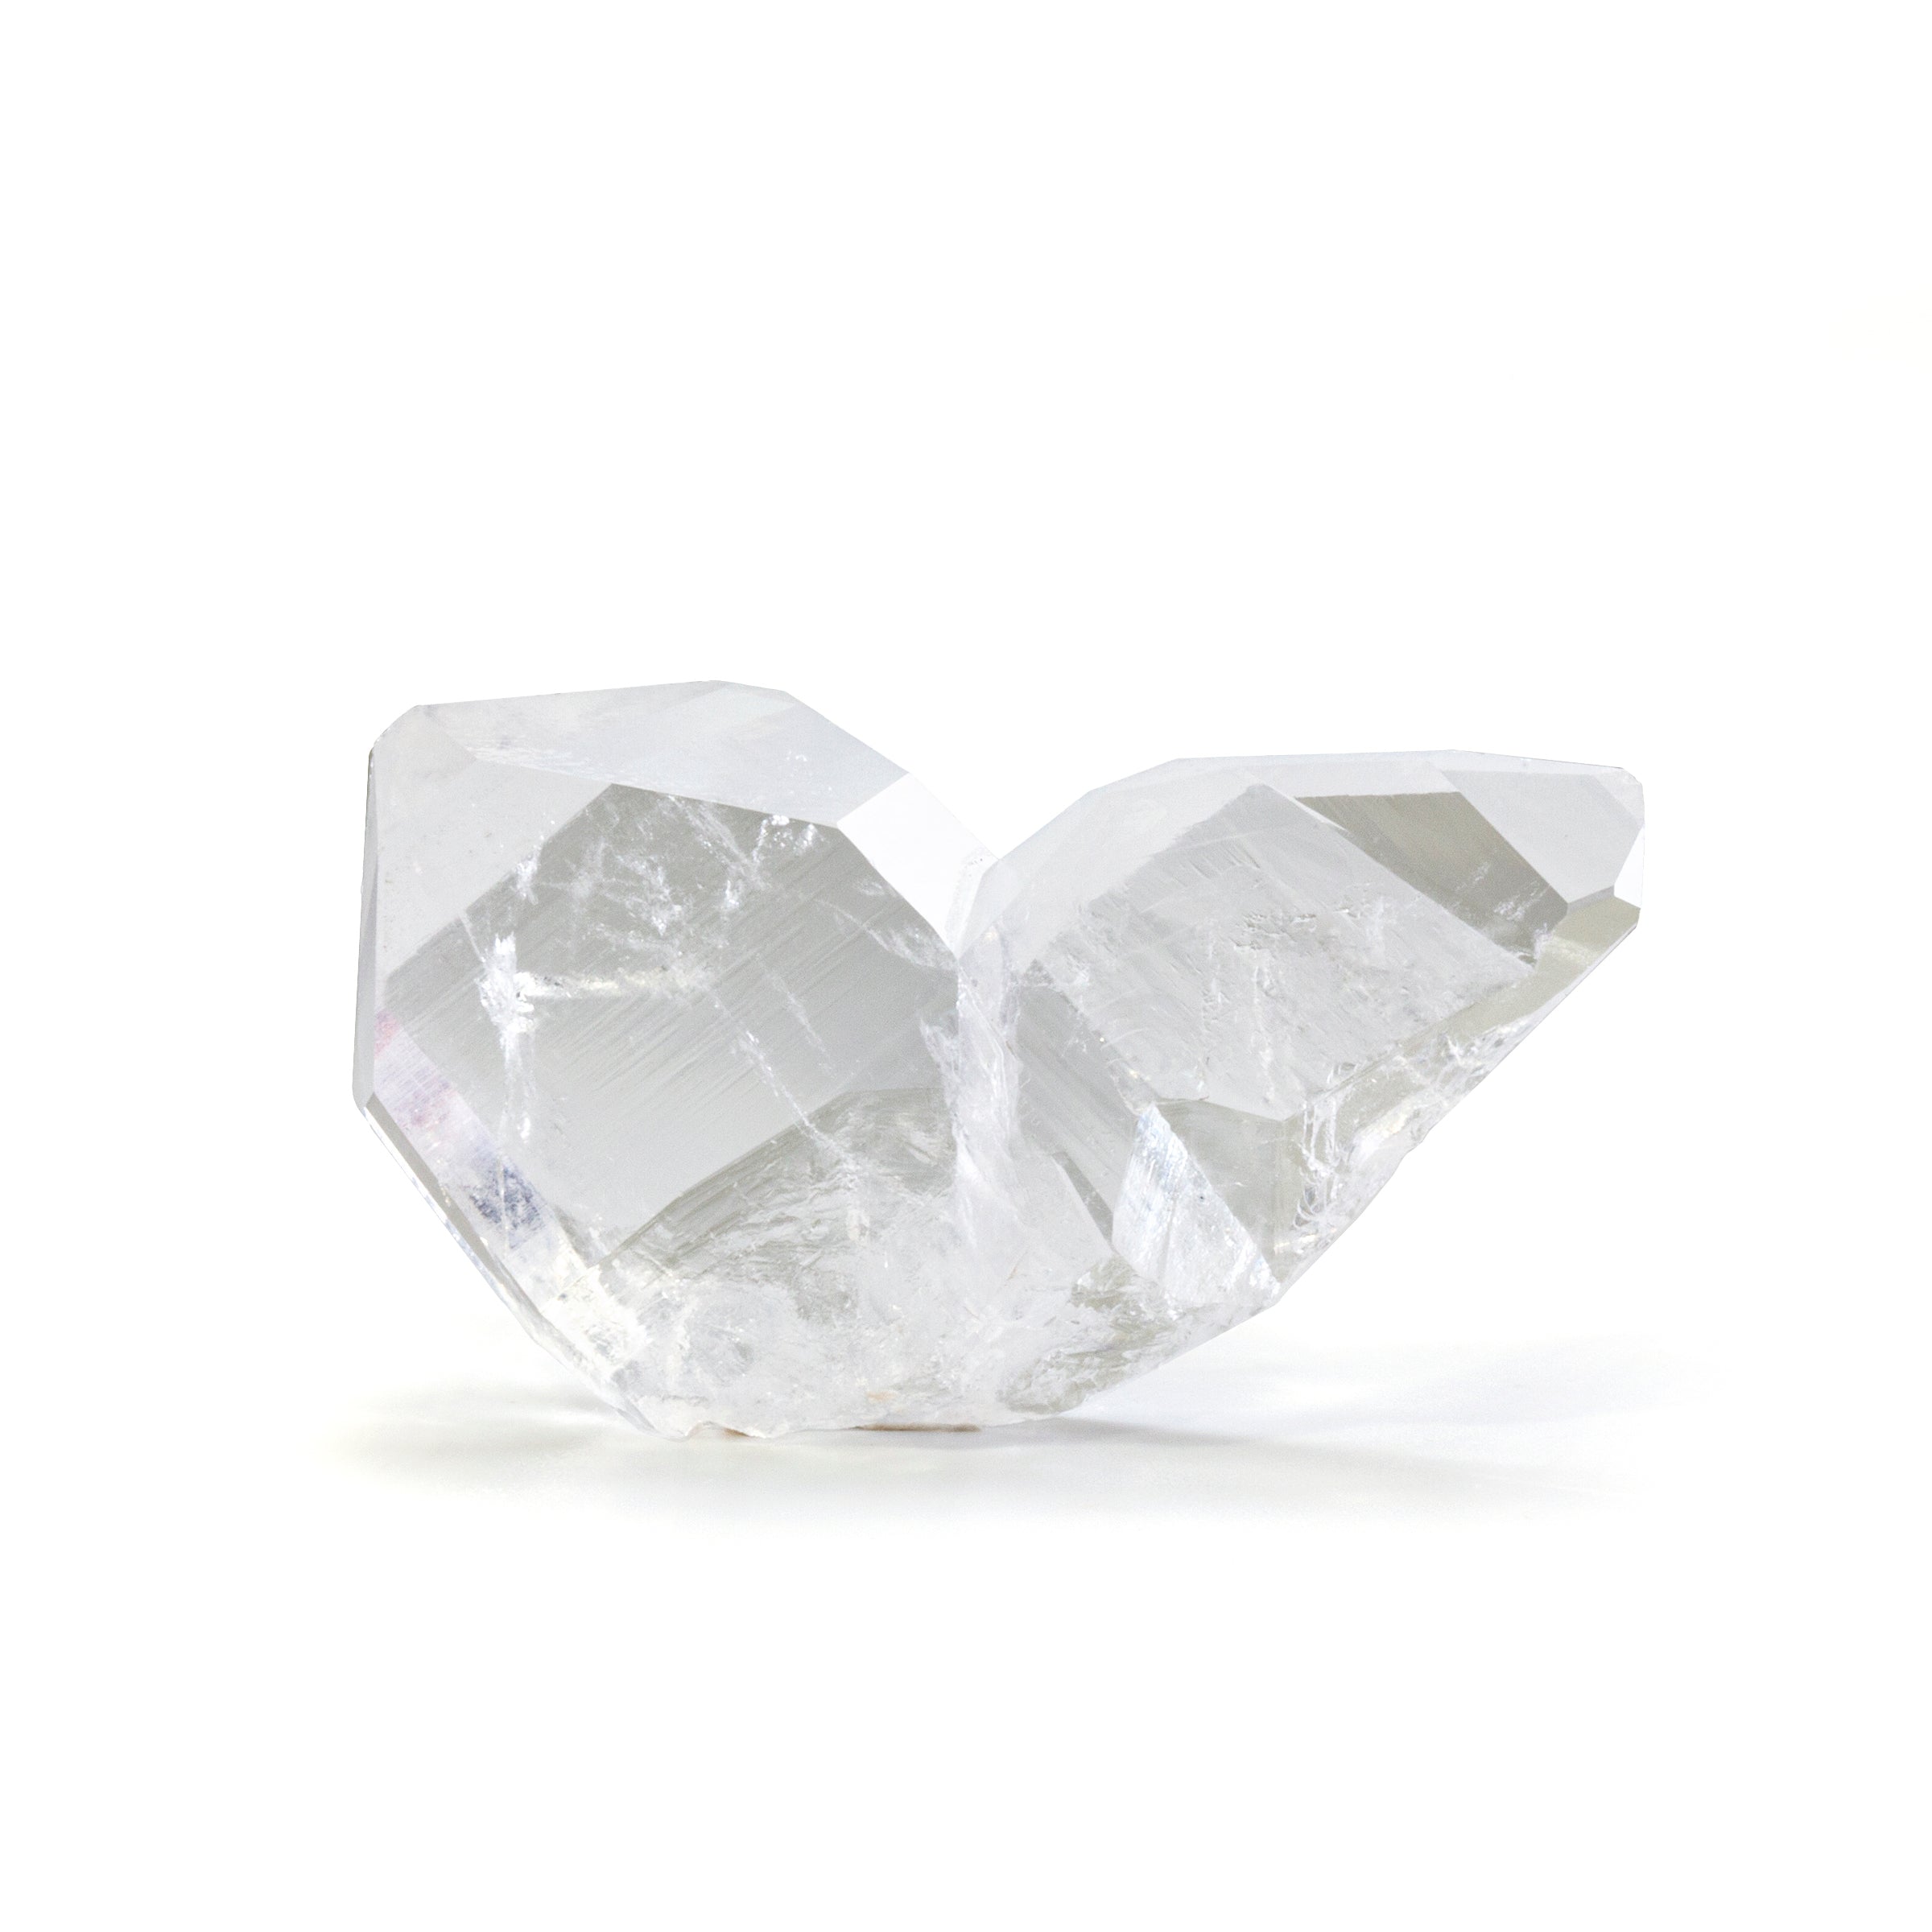 Japan Law 27.22 mm 86 carat Quartz Natural Twin Crystal - Nepal - HHX-099 - Crystalarium